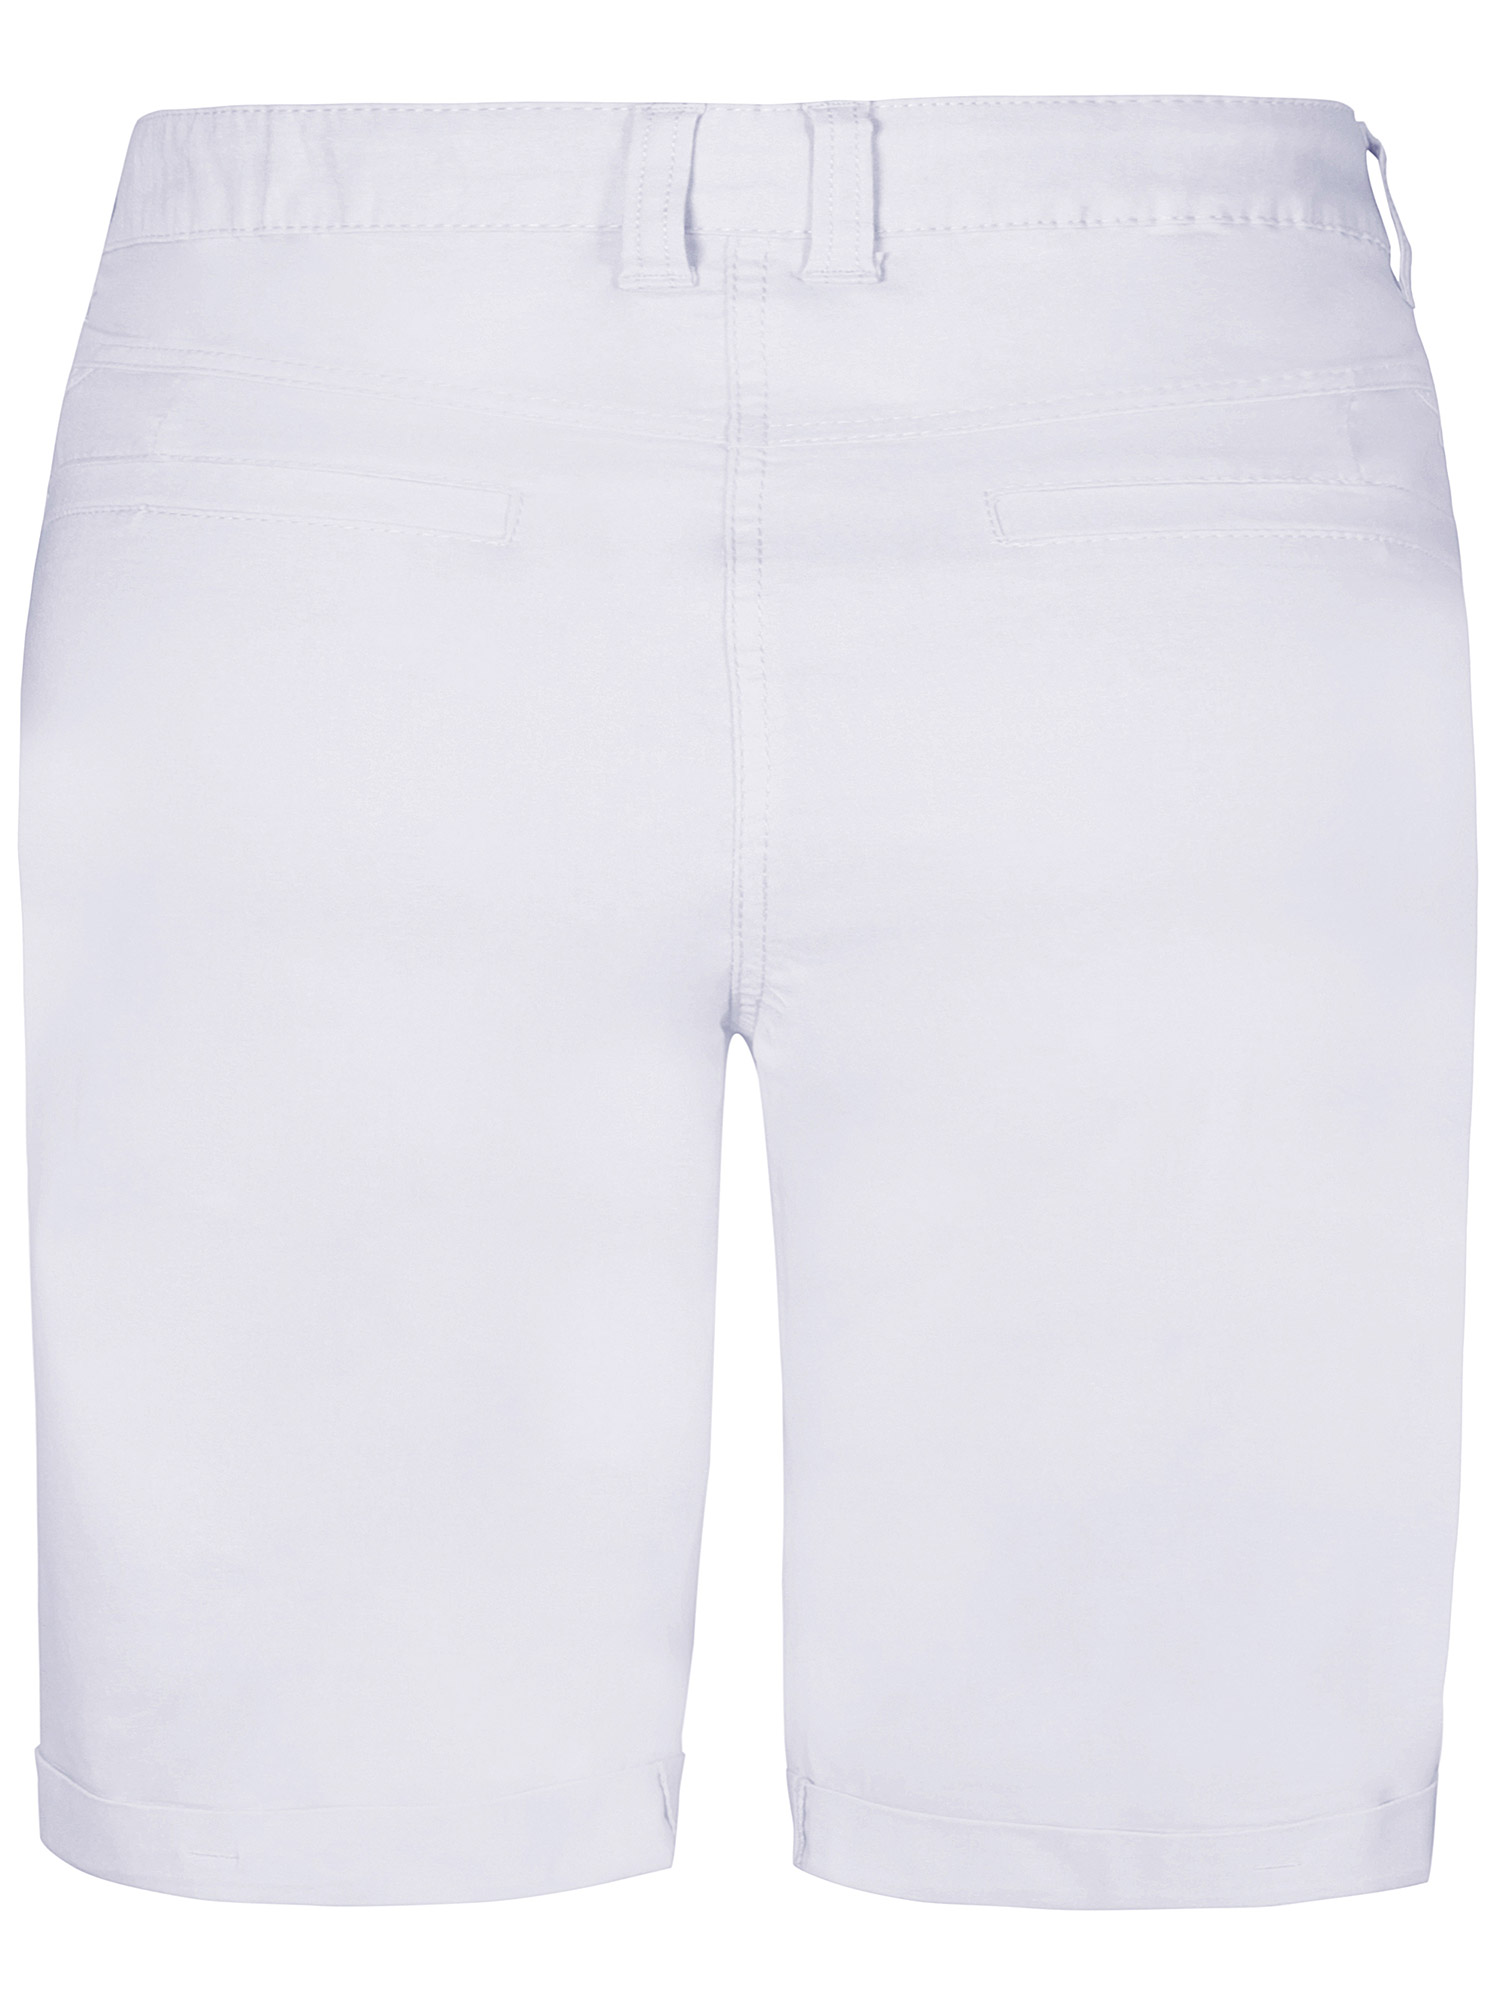 STEP - Hvide shorts i kraftiv viskose med teretch fra Zhenzi